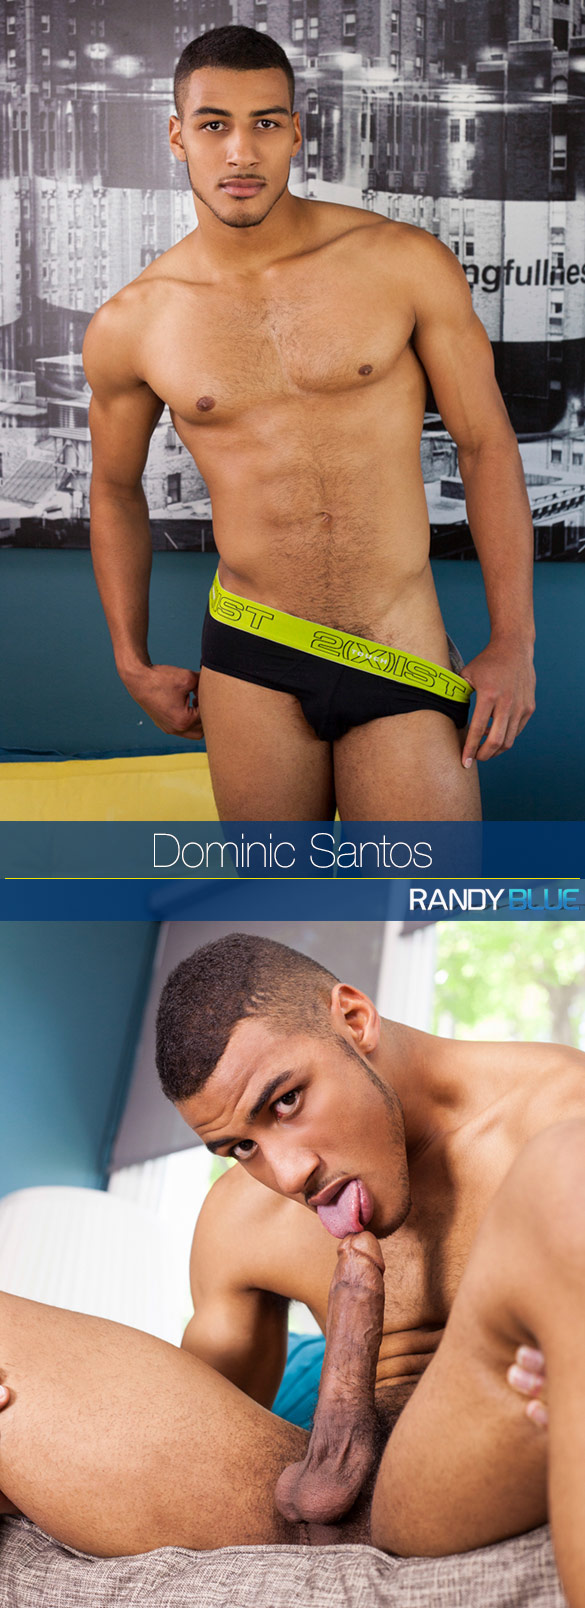 Randy Blue: Dominic Santos' self suck and ass play